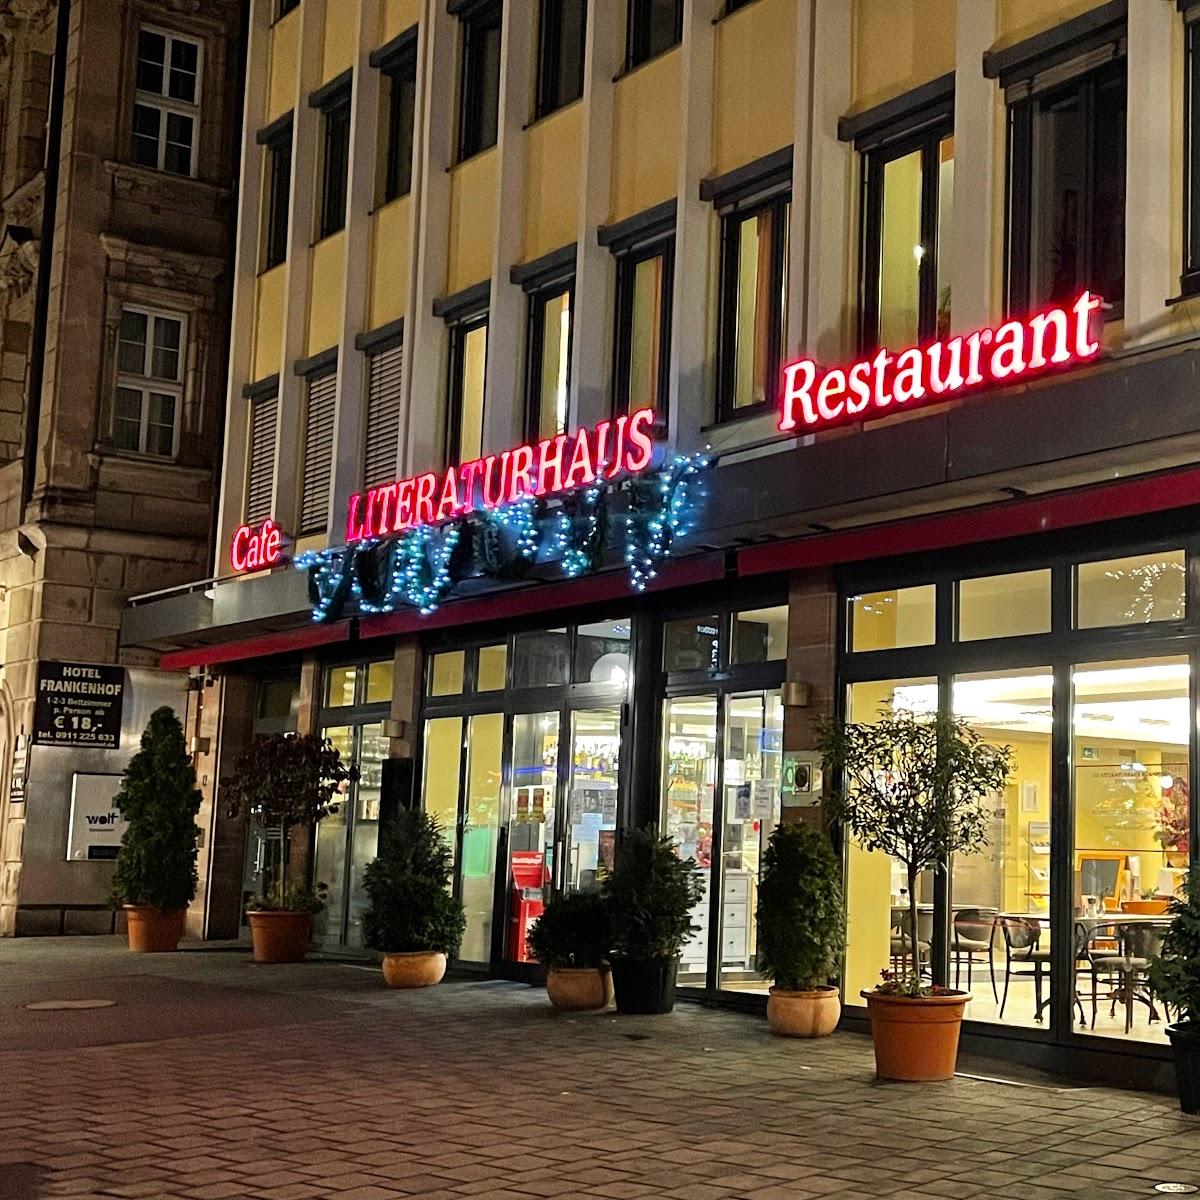 Restaurant "Literaturhaus" in Nürnberg